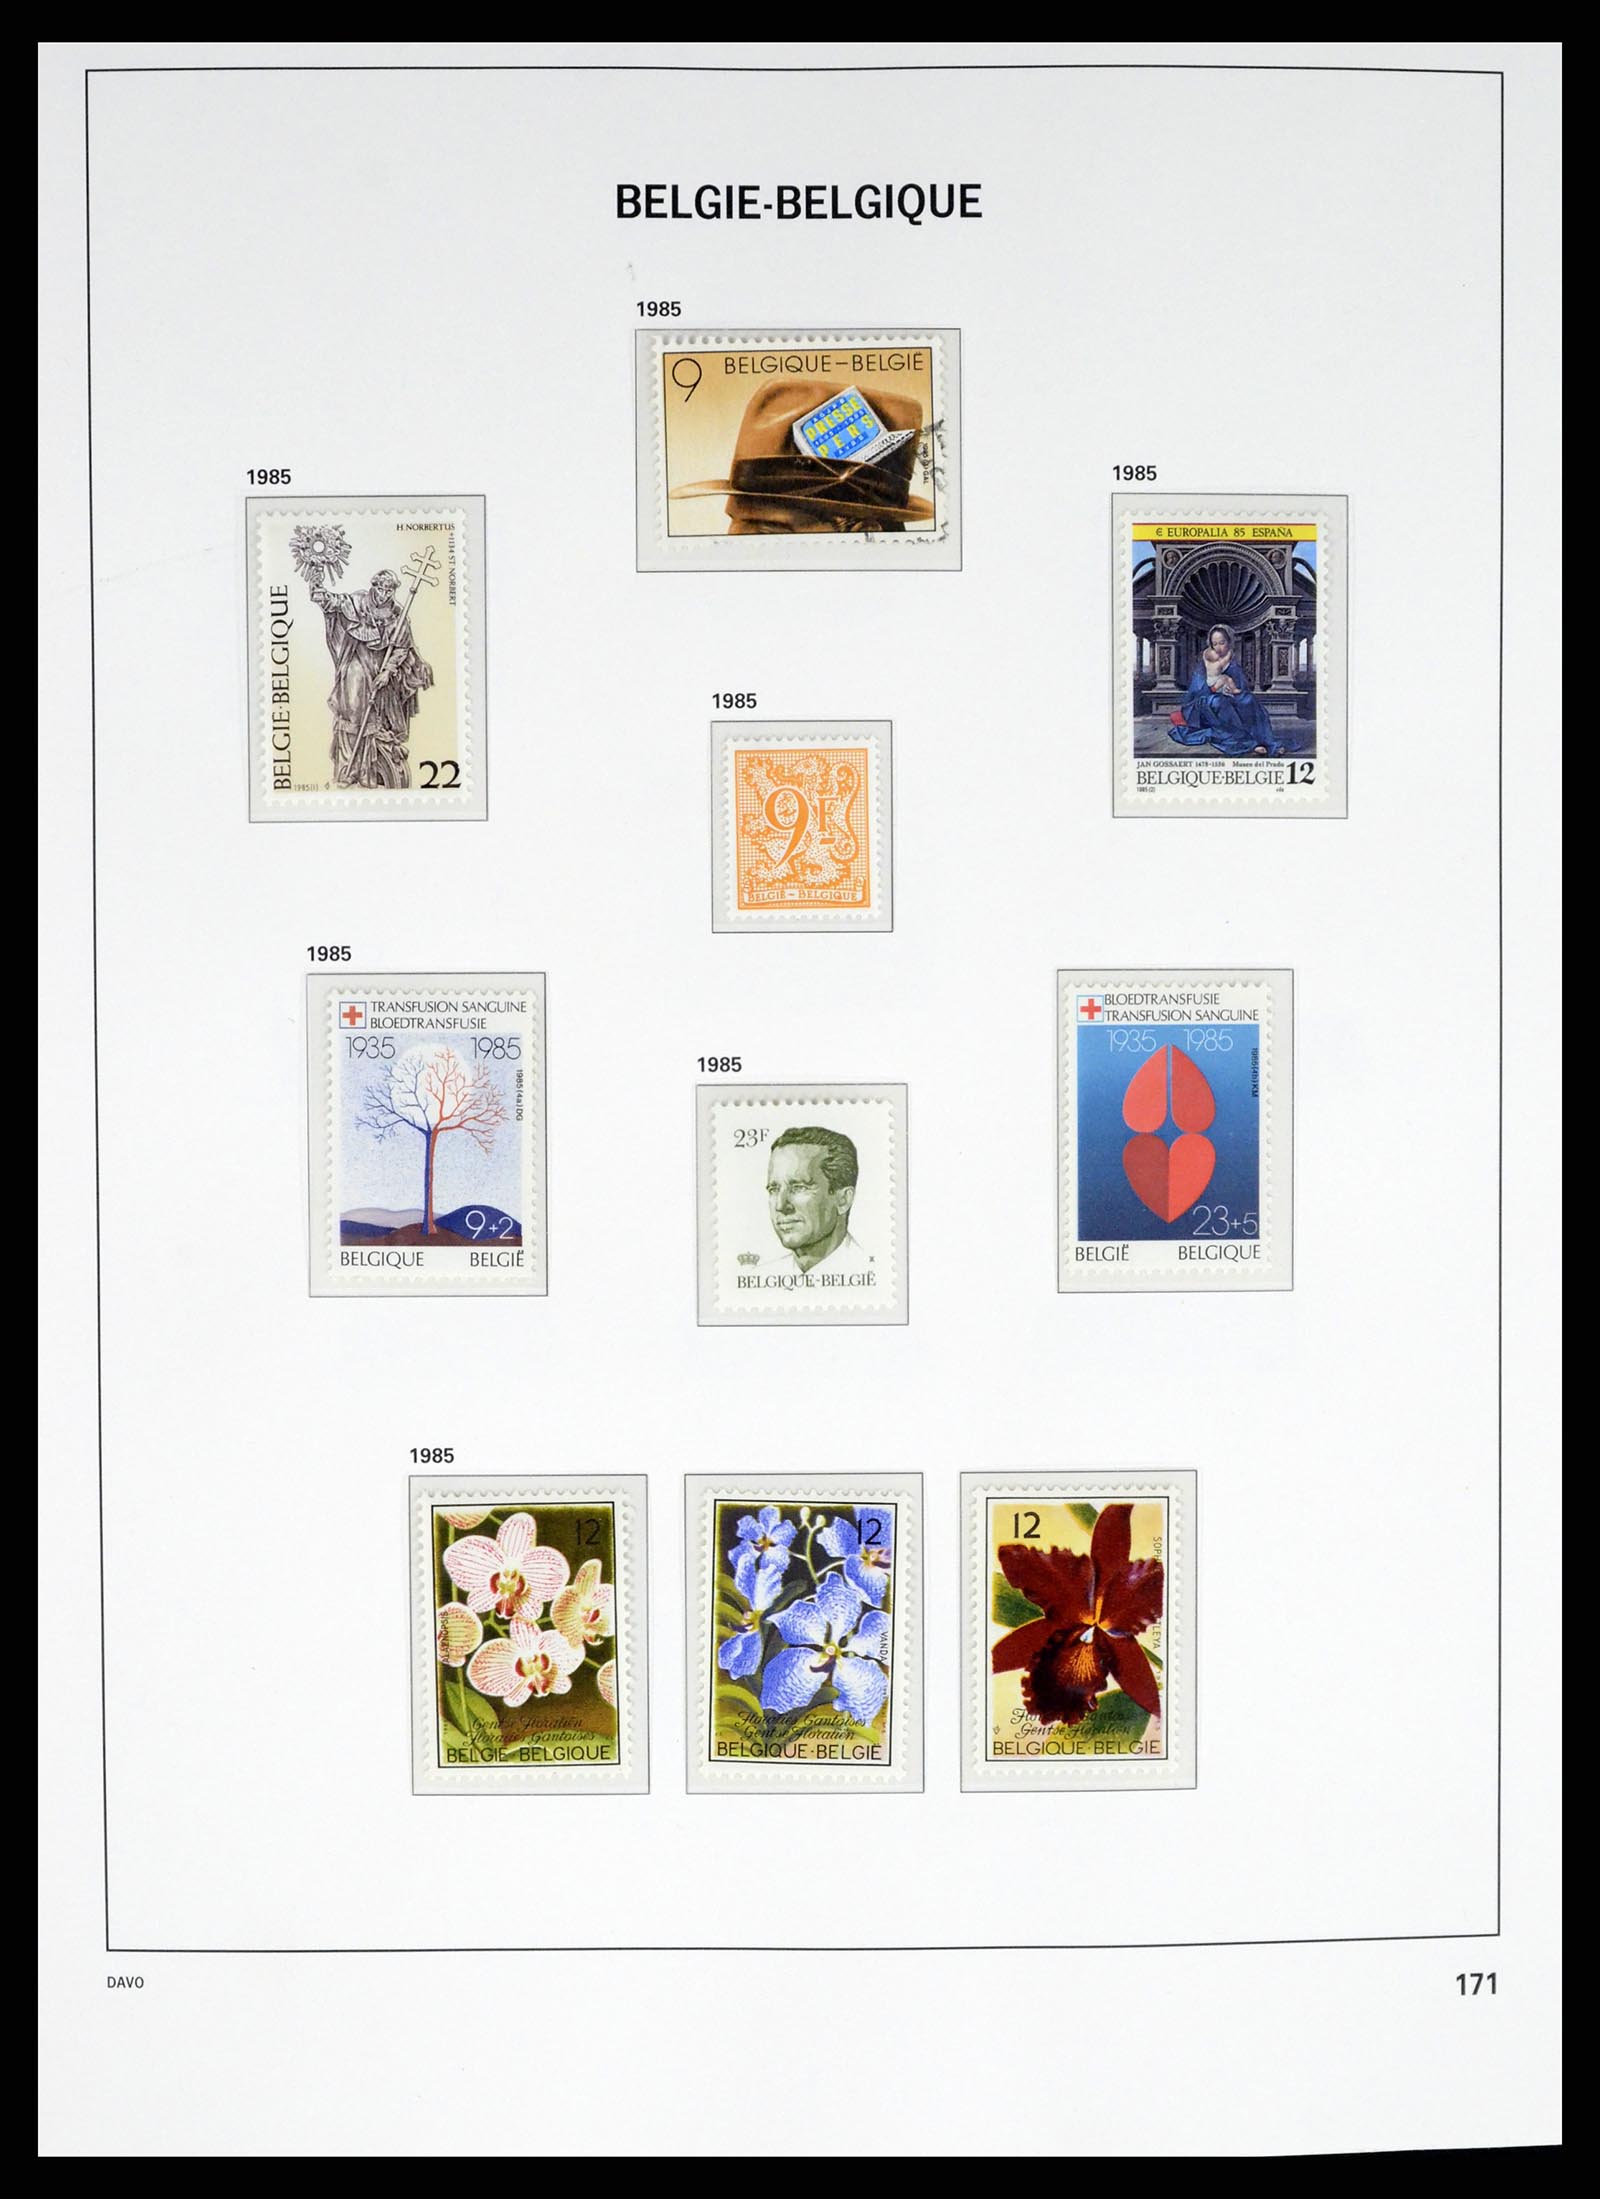 37368 072 - Stamp collection 37368 Belgium 1969-2003.